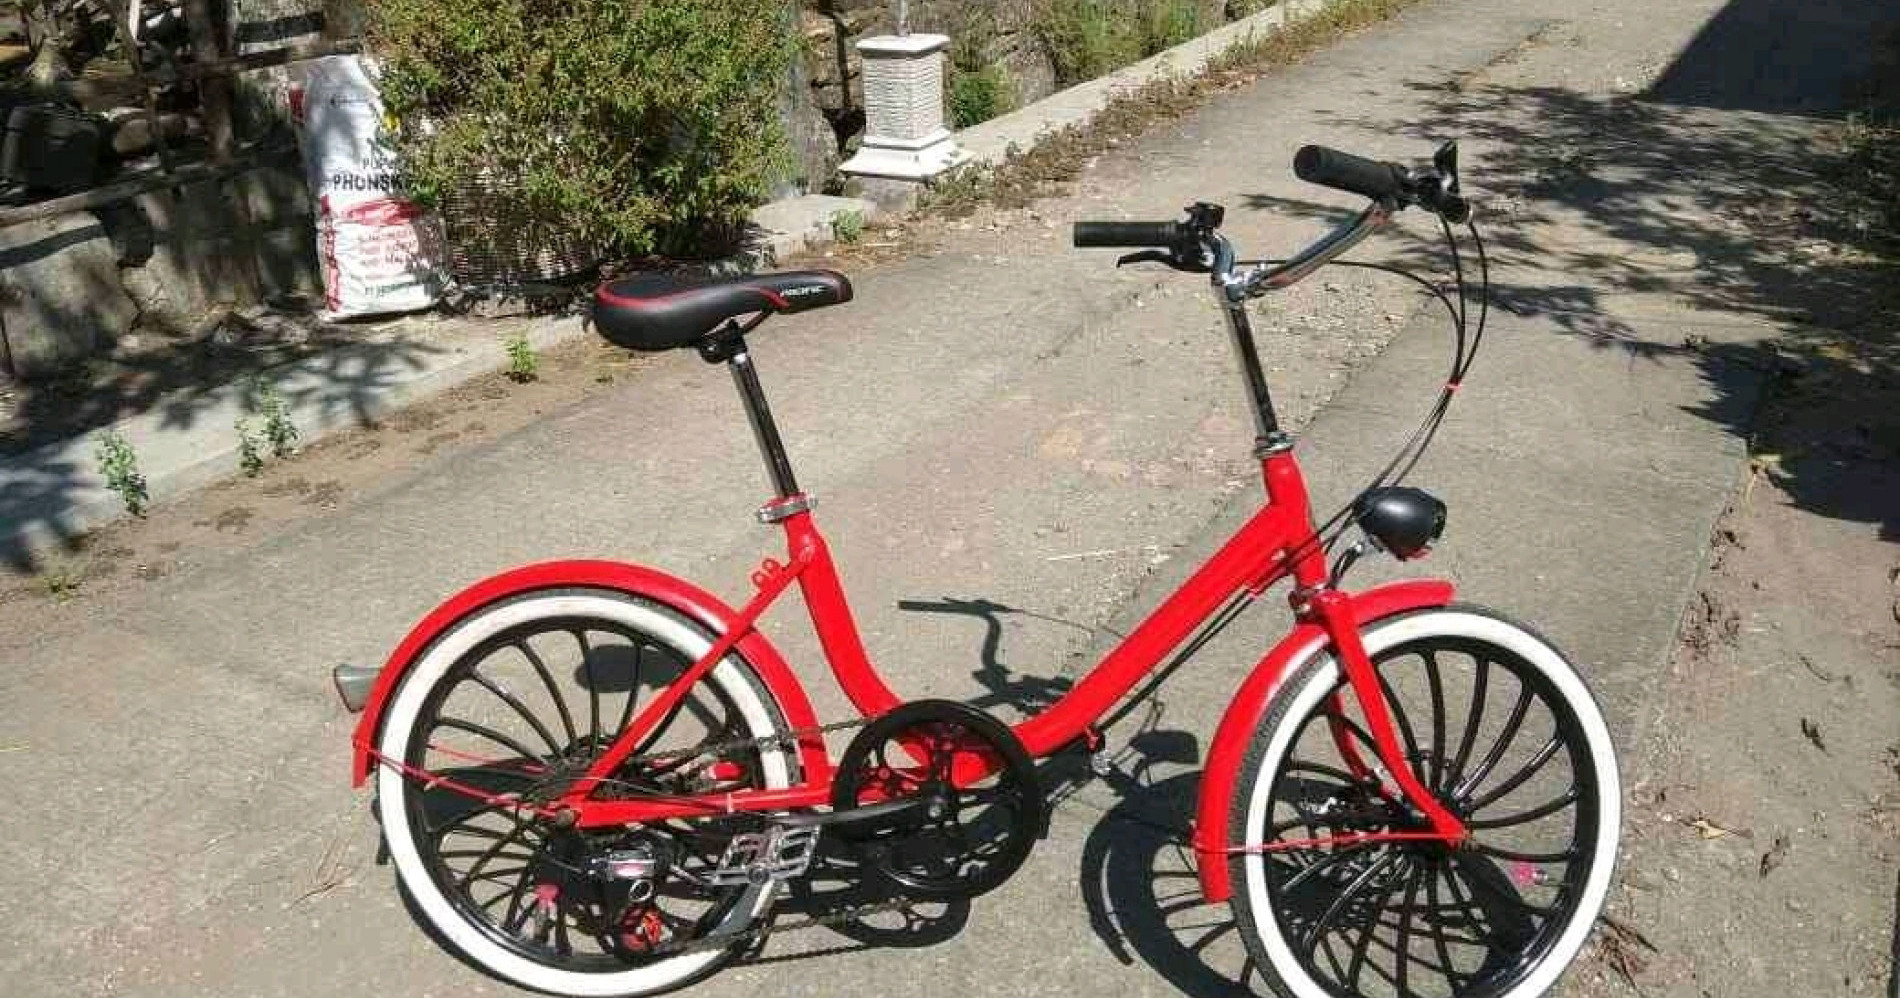 Sepeda Minion yang sedang tren di kalangan masyarakat.